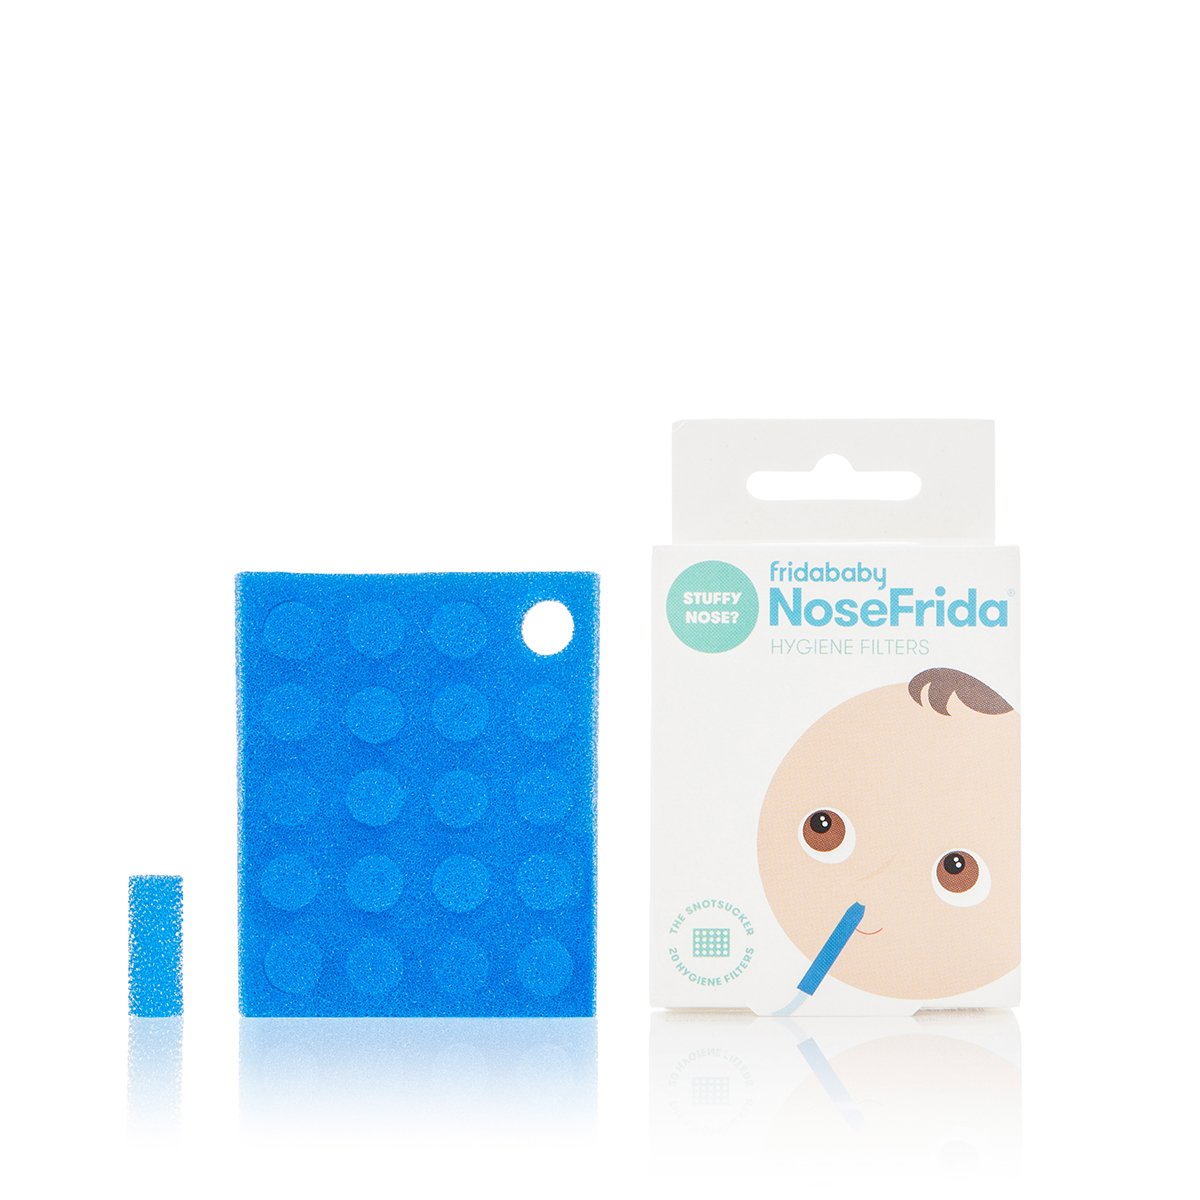 nosefrida-replacement-hygiene-filter-pack_2048x